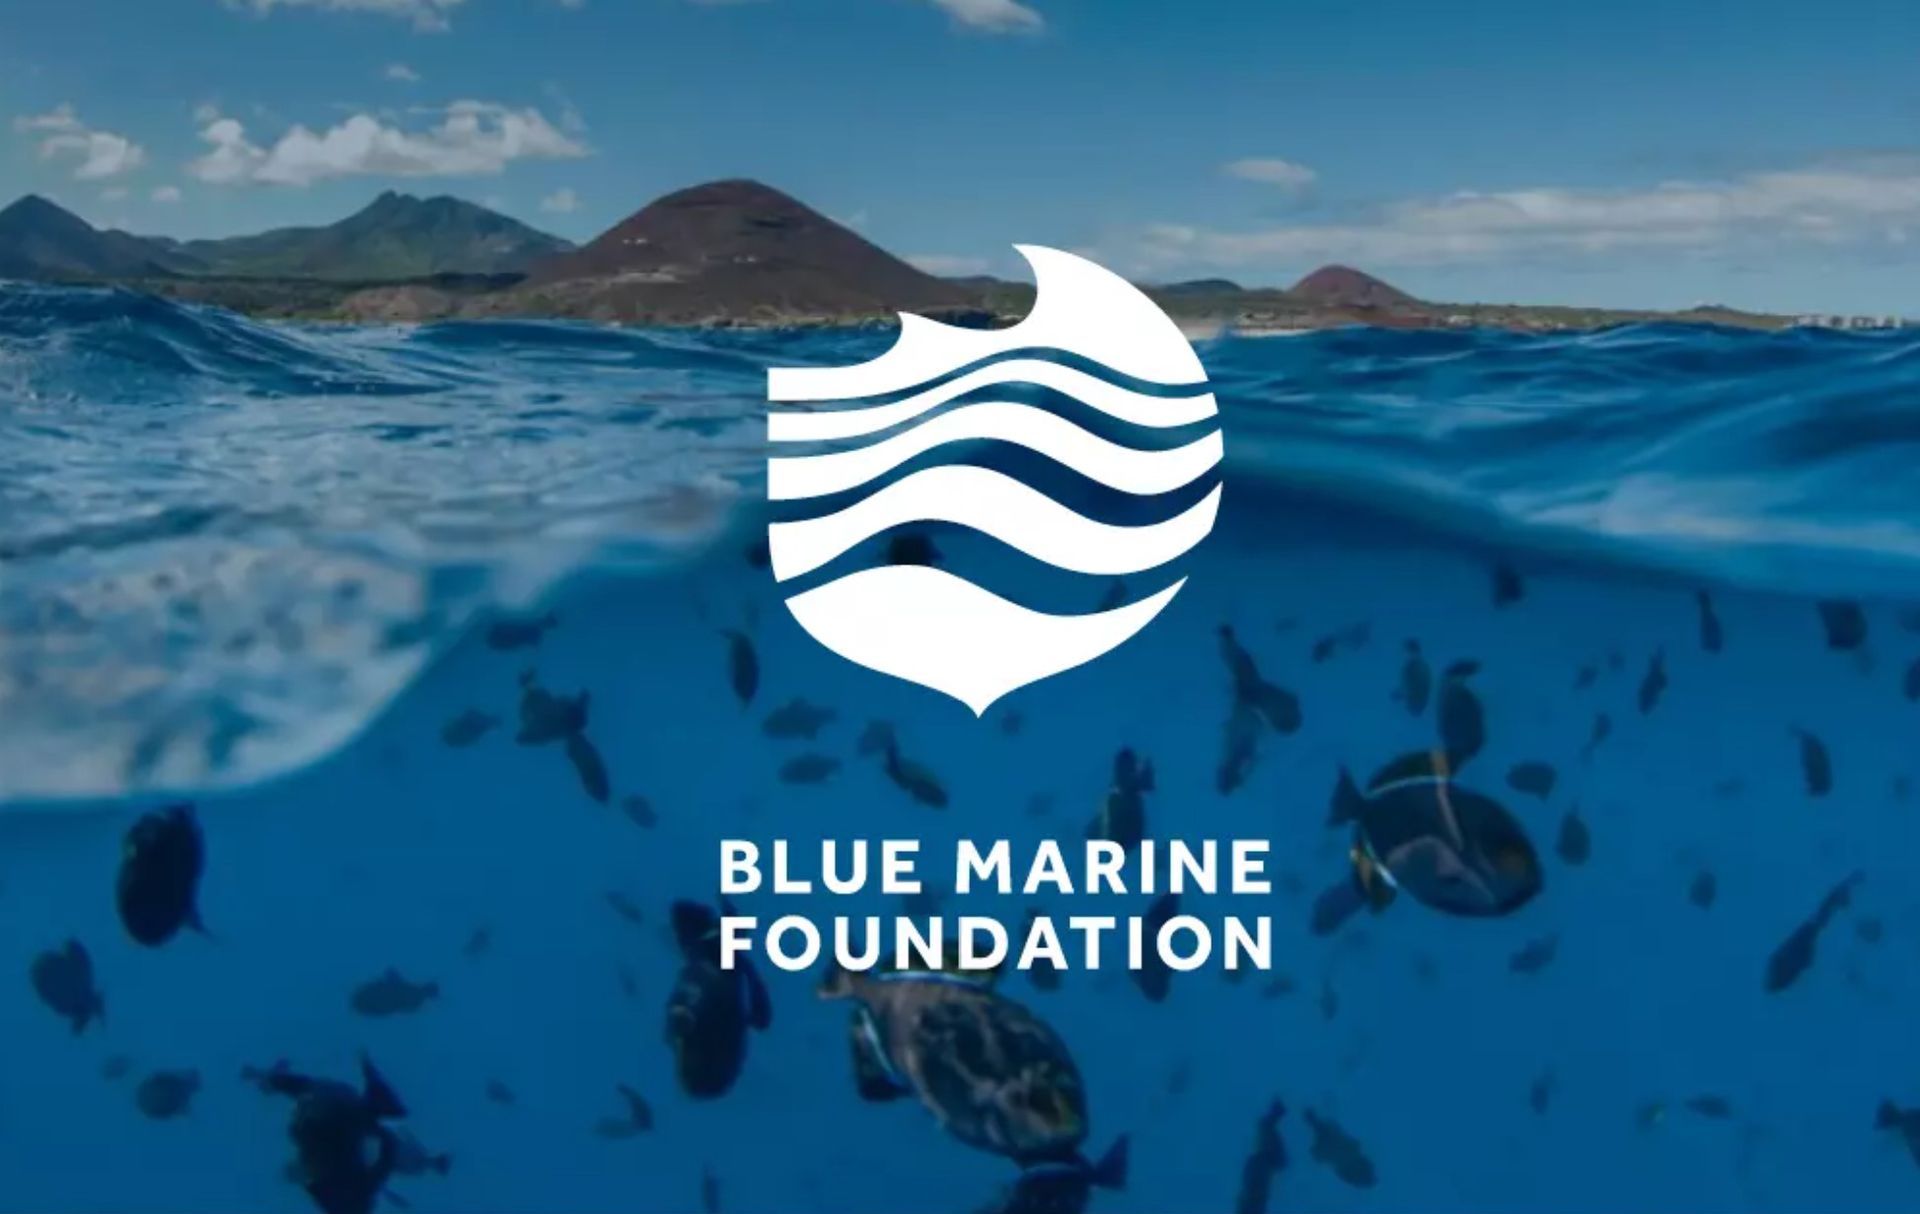 Blue Marin Foundation Logo on an ocean background